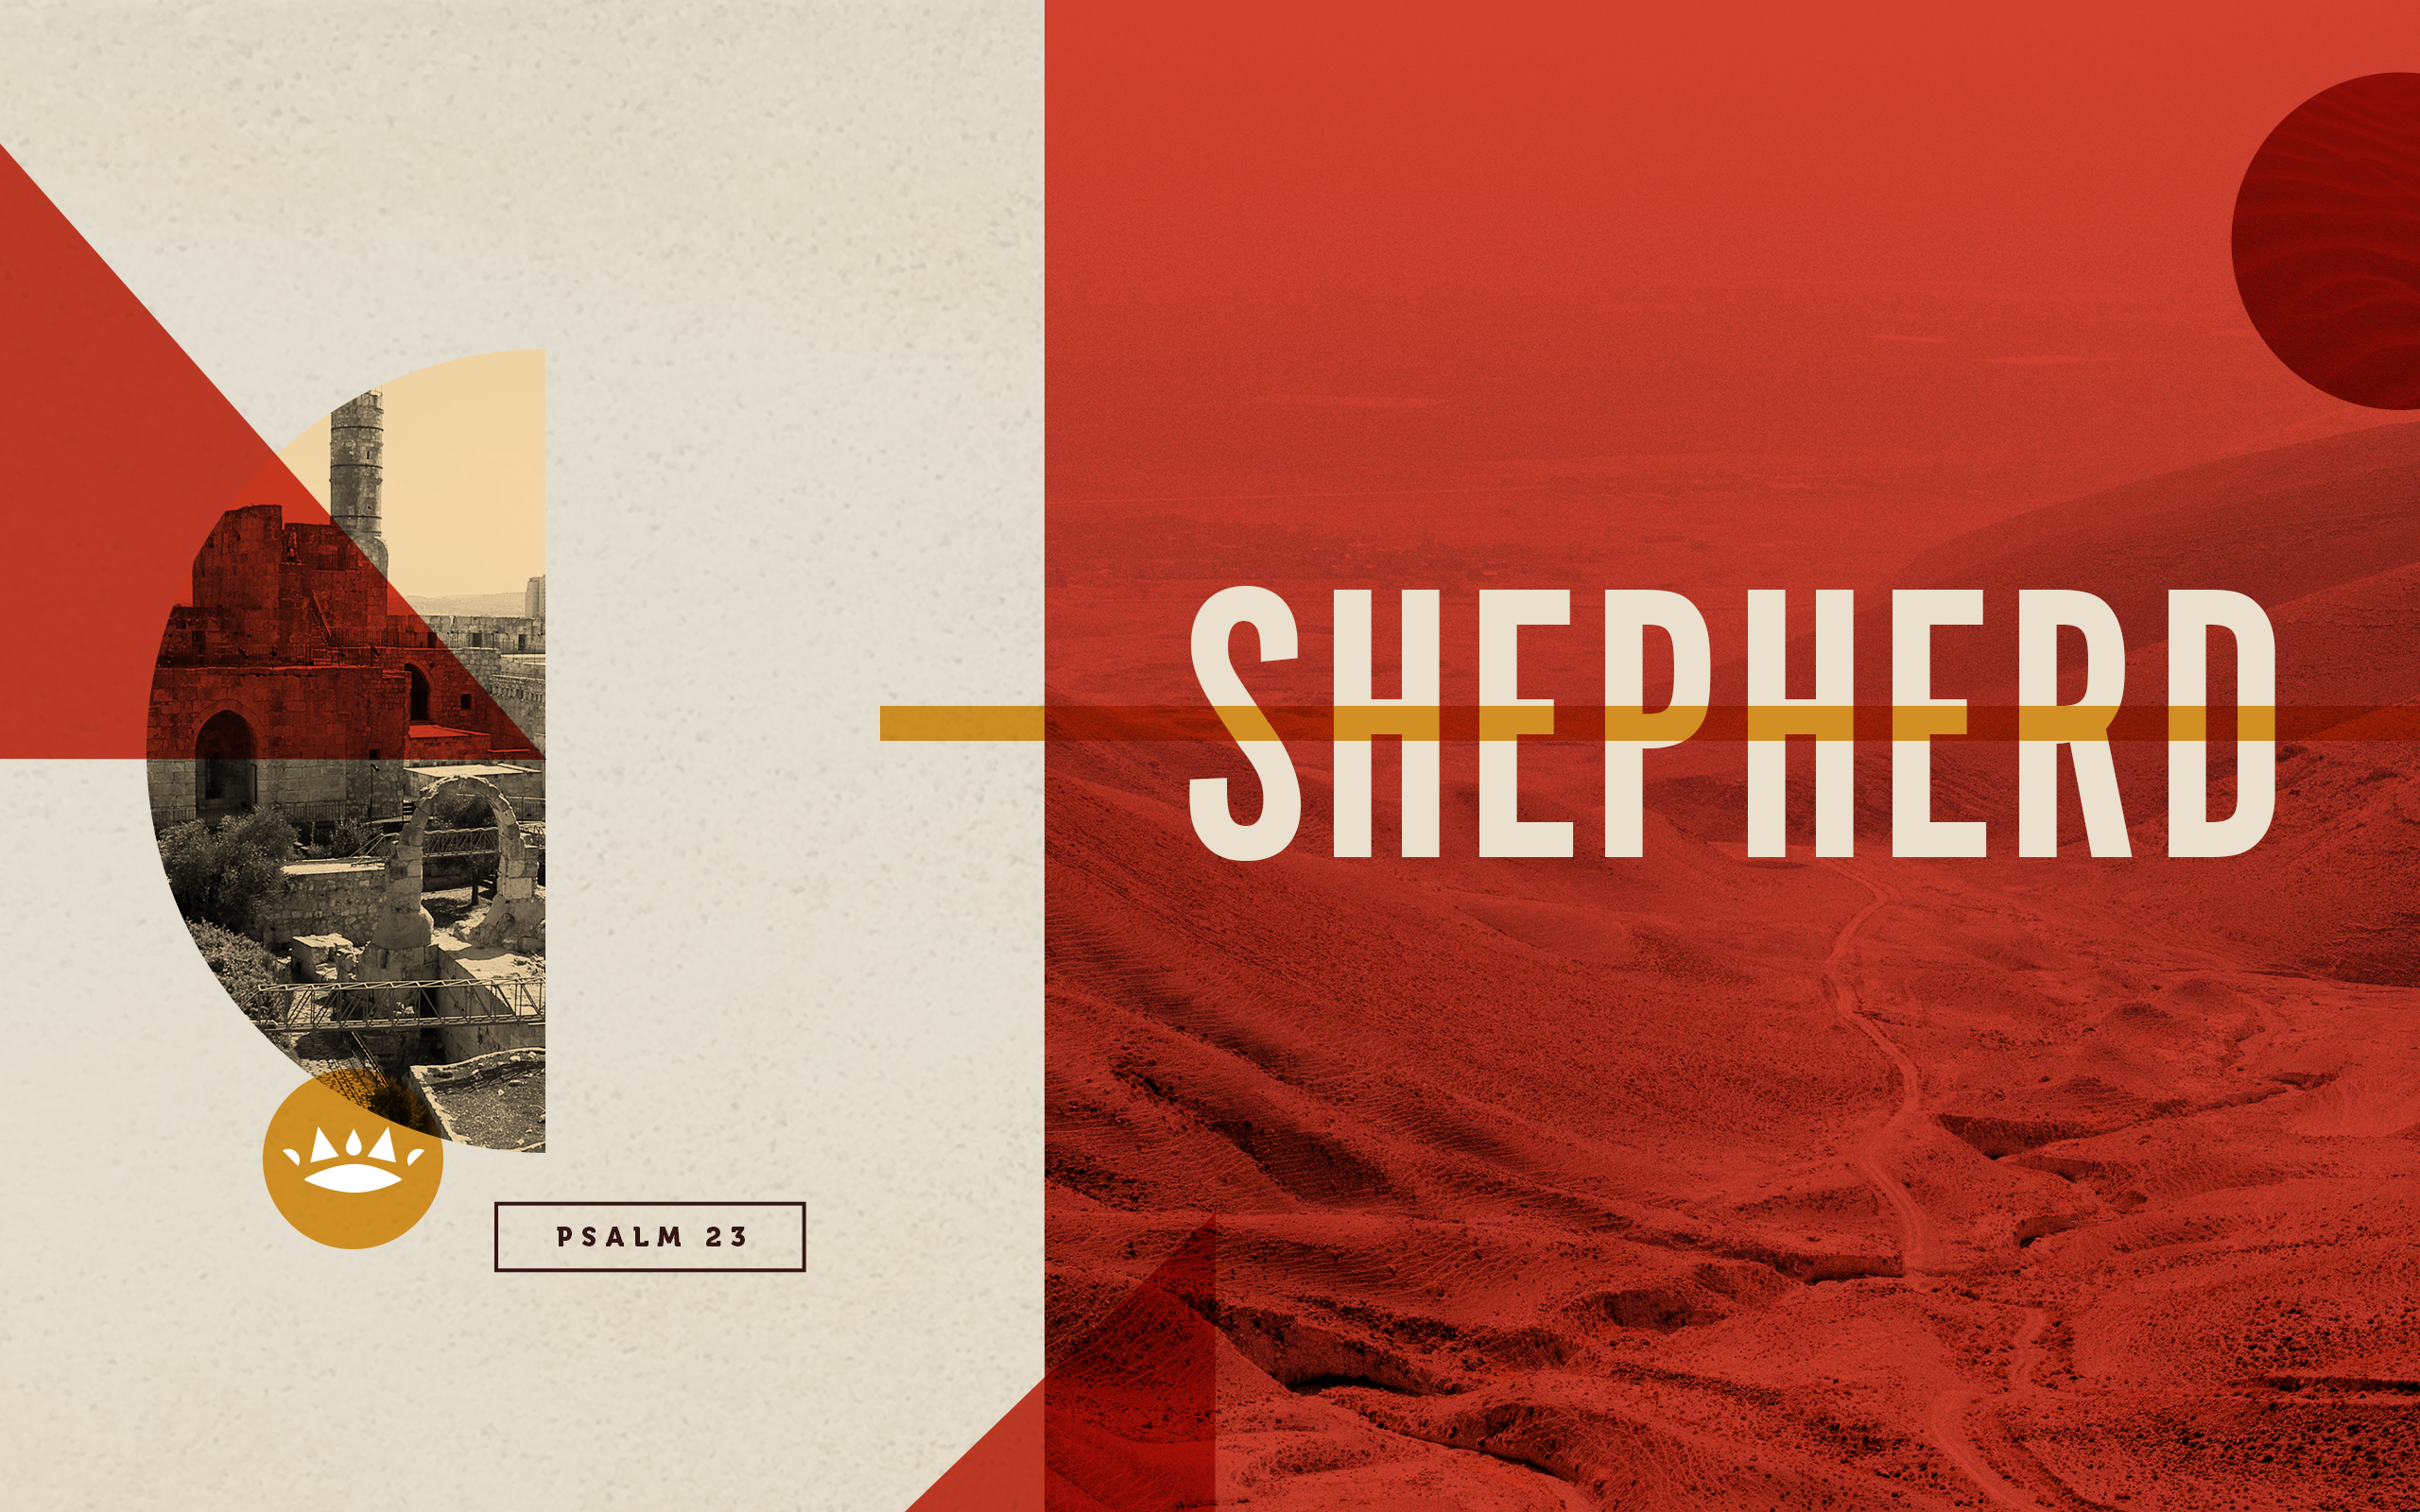 Shepherd – The Lord is My Shepherd